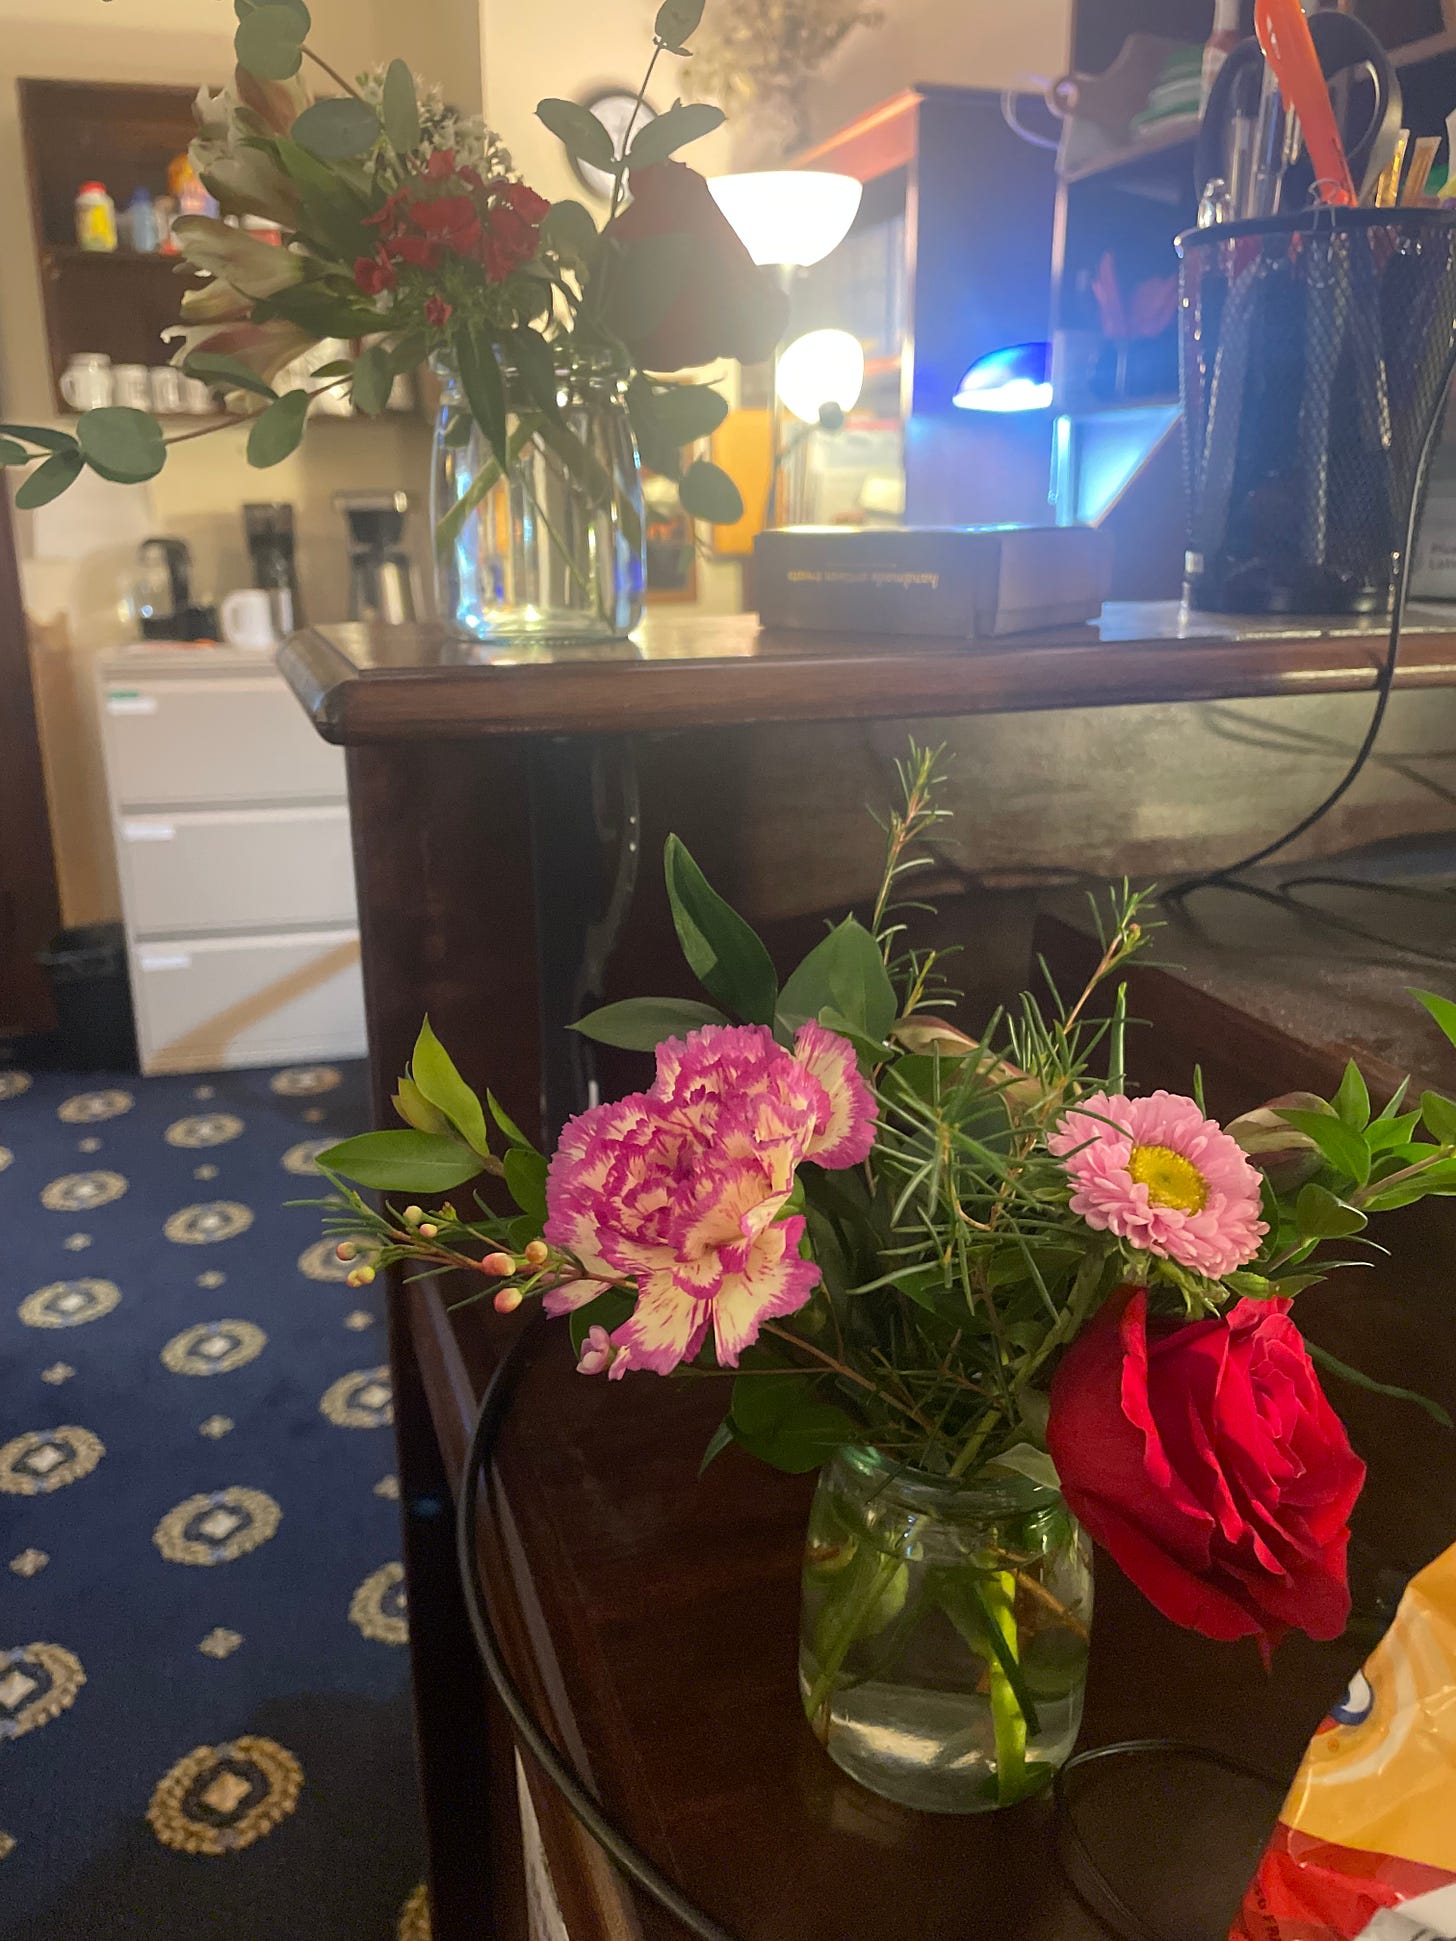 Flowers delivered to Senator Tobin's team from Senator Tobin's spouse